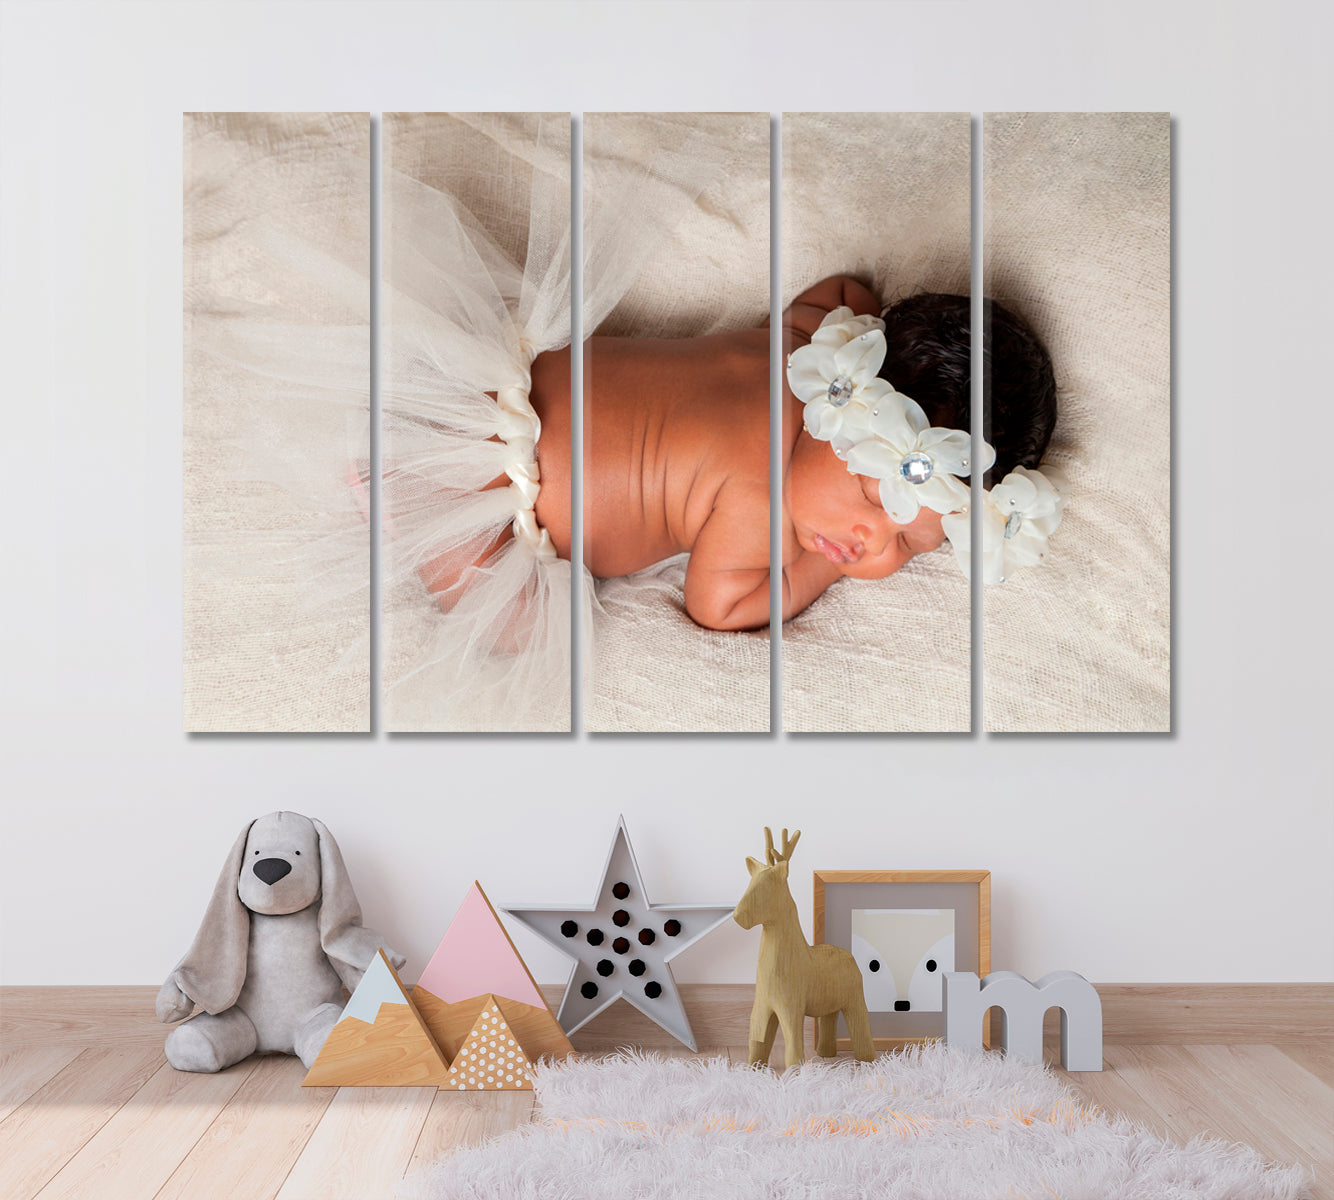 PEACEFUL SLEEP Sweet Newborn Baby Girl Kids Room Canvas Art Print Artesty 5 panels 36" x 24" 